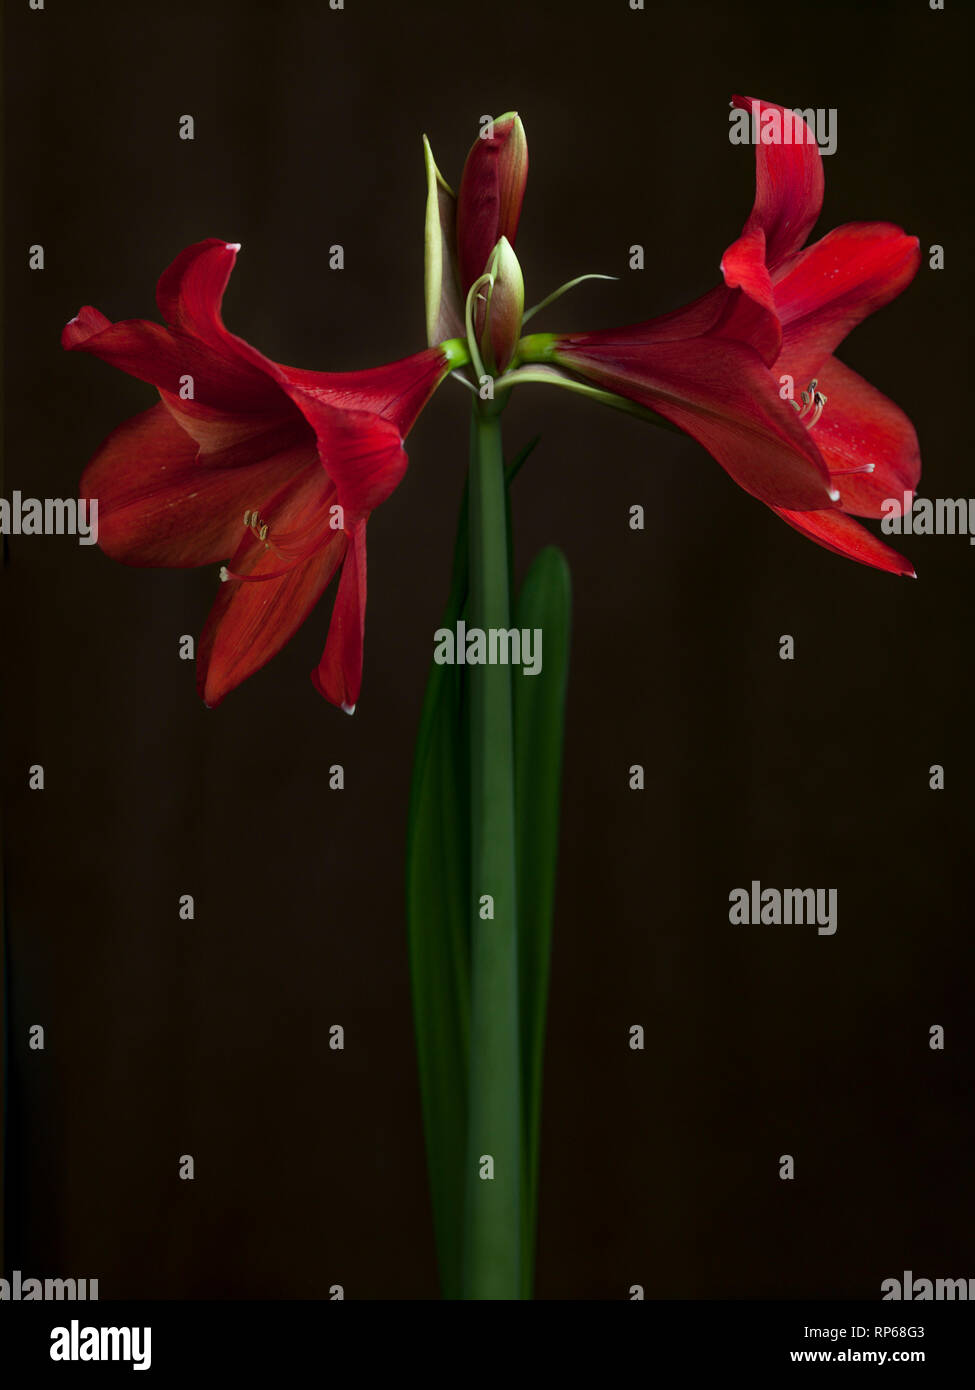 Red Amaryllis Flowers on Long Stem against Black Background Stock Photo